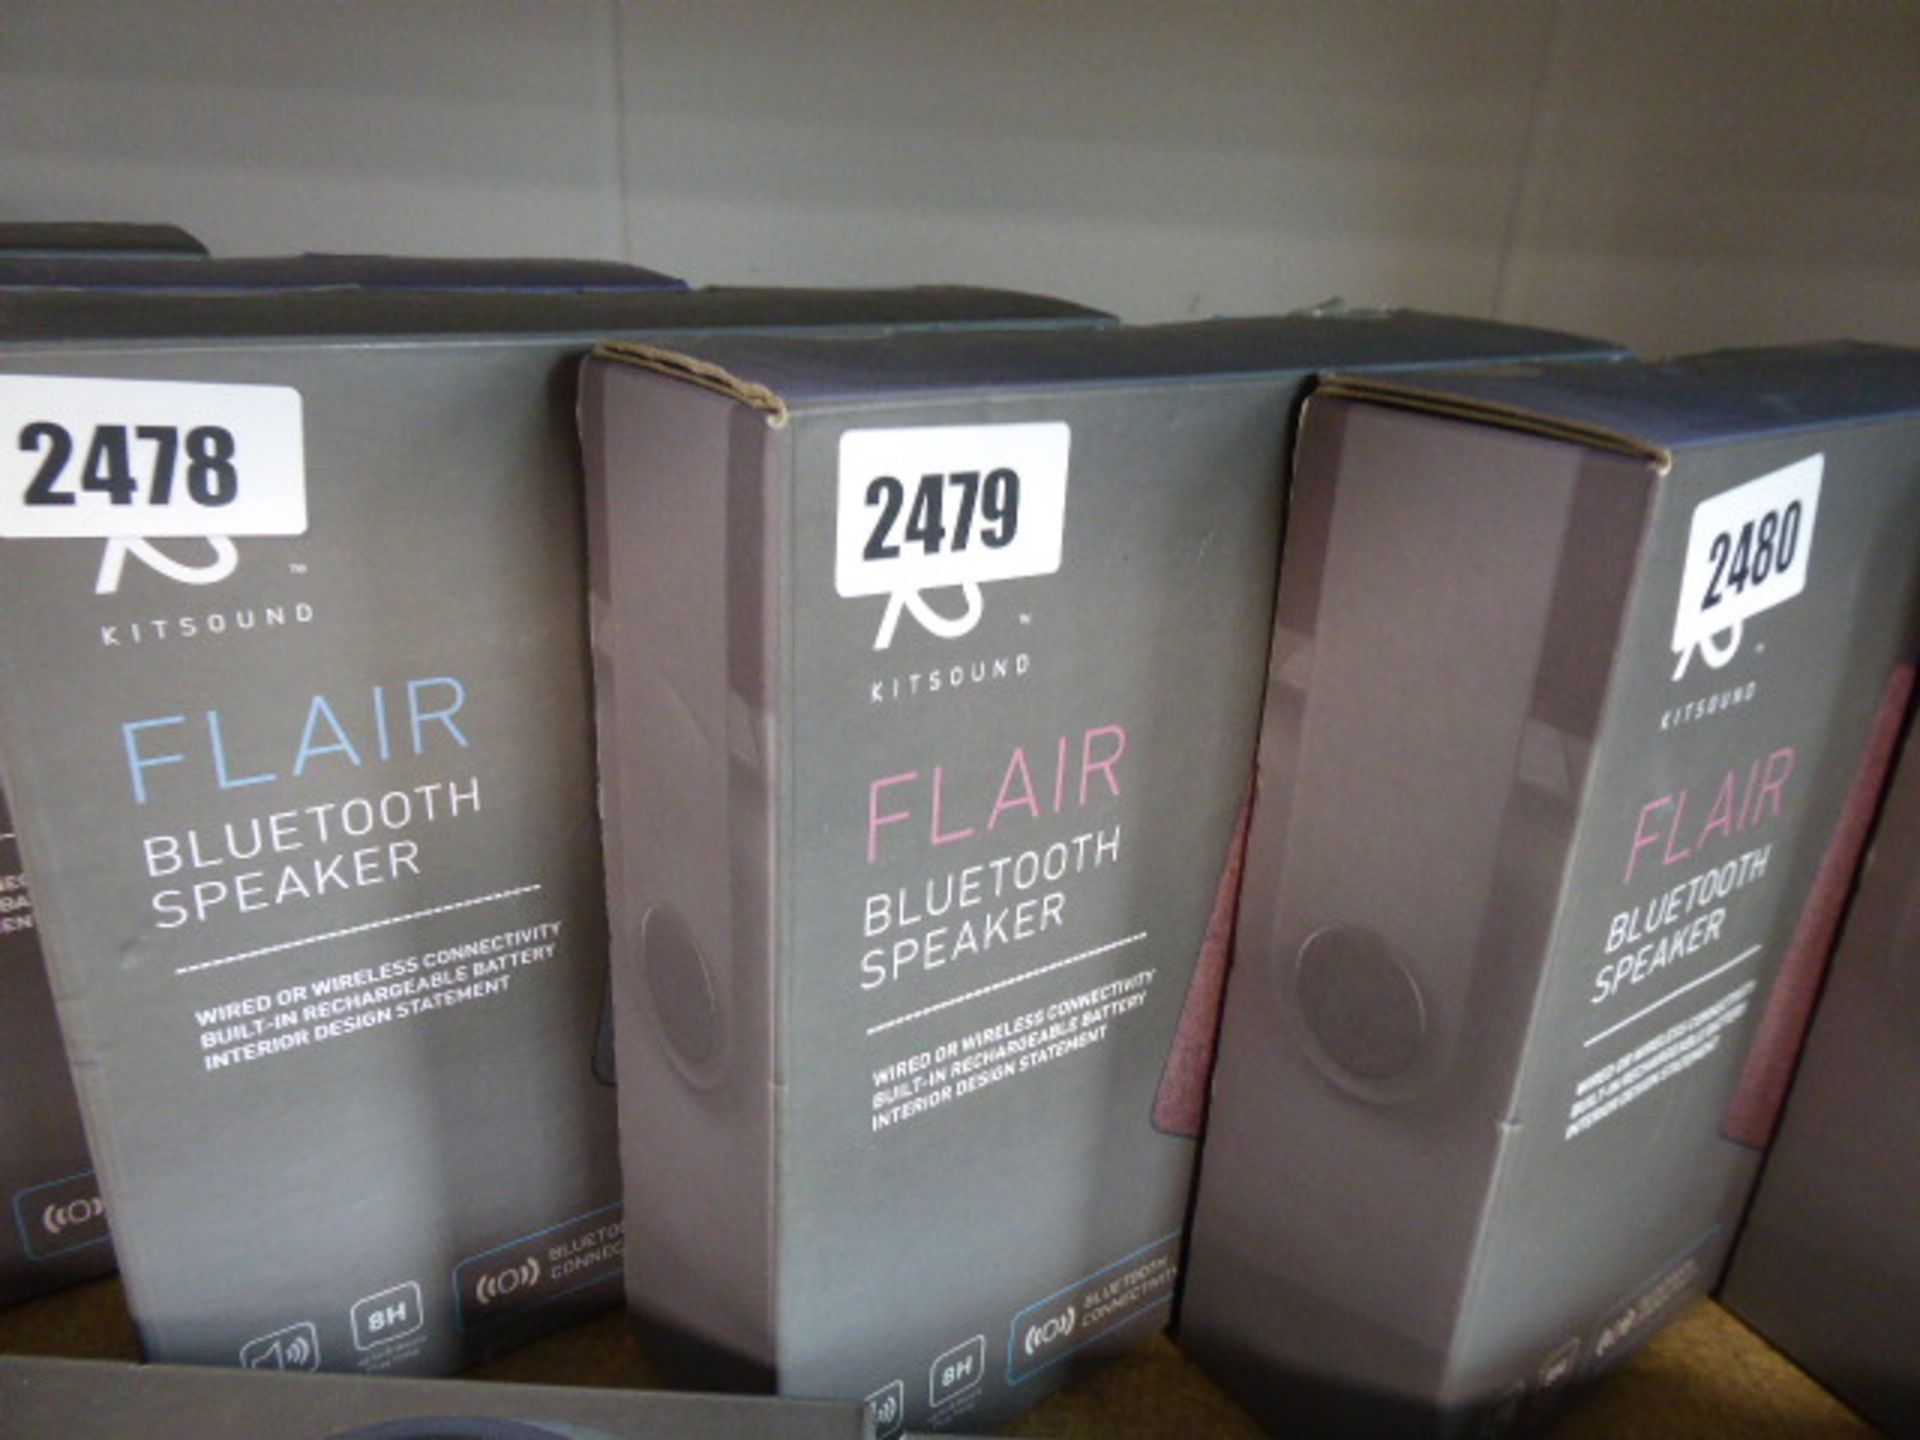 Kit Sound Flare portable bluetooth speaker in box